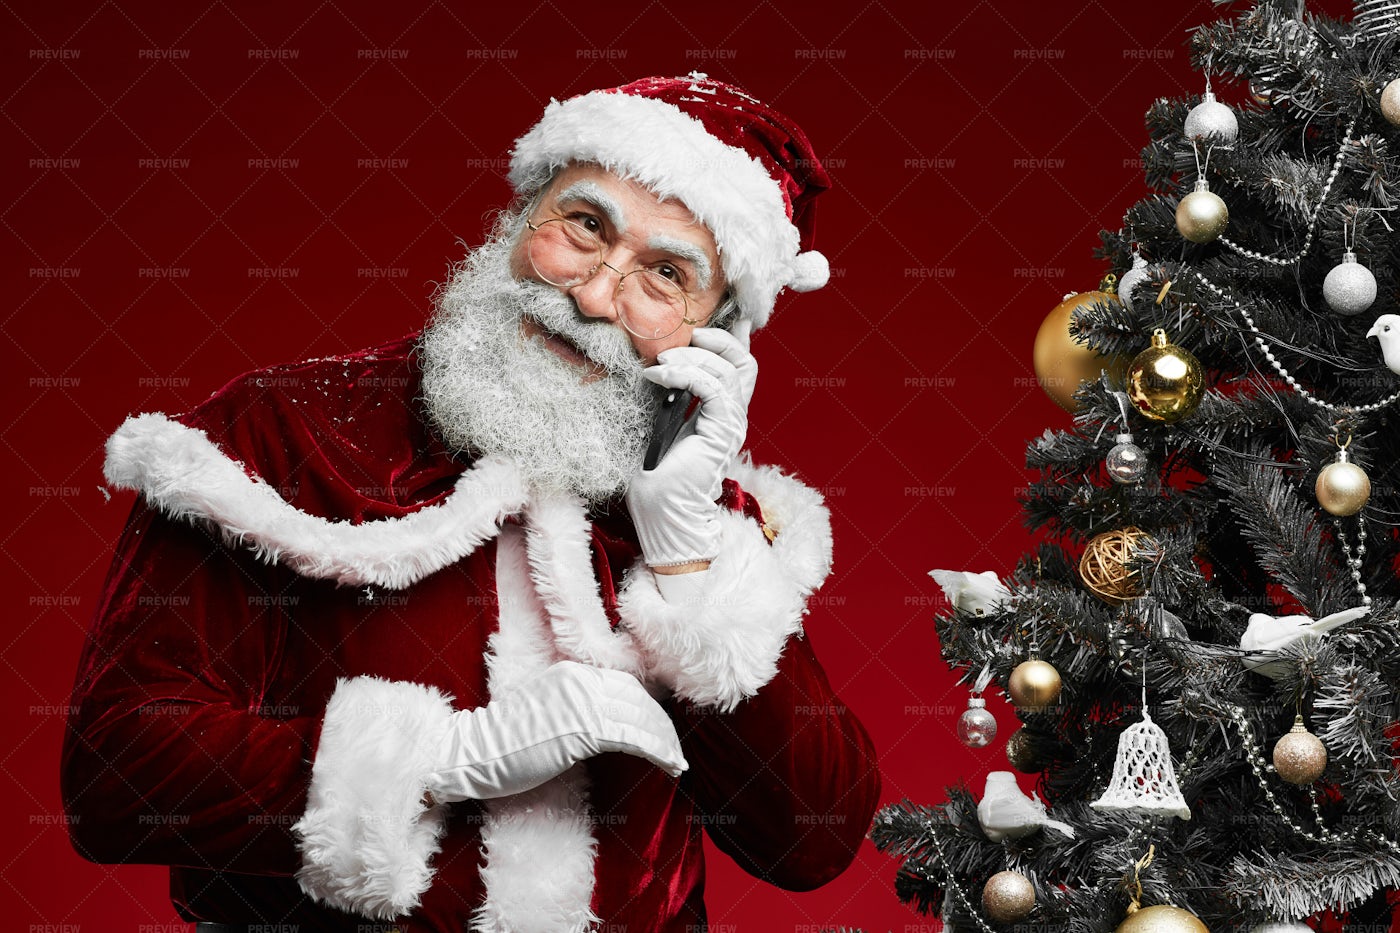 Santa Claus Speaking By Phone: Stock Photos